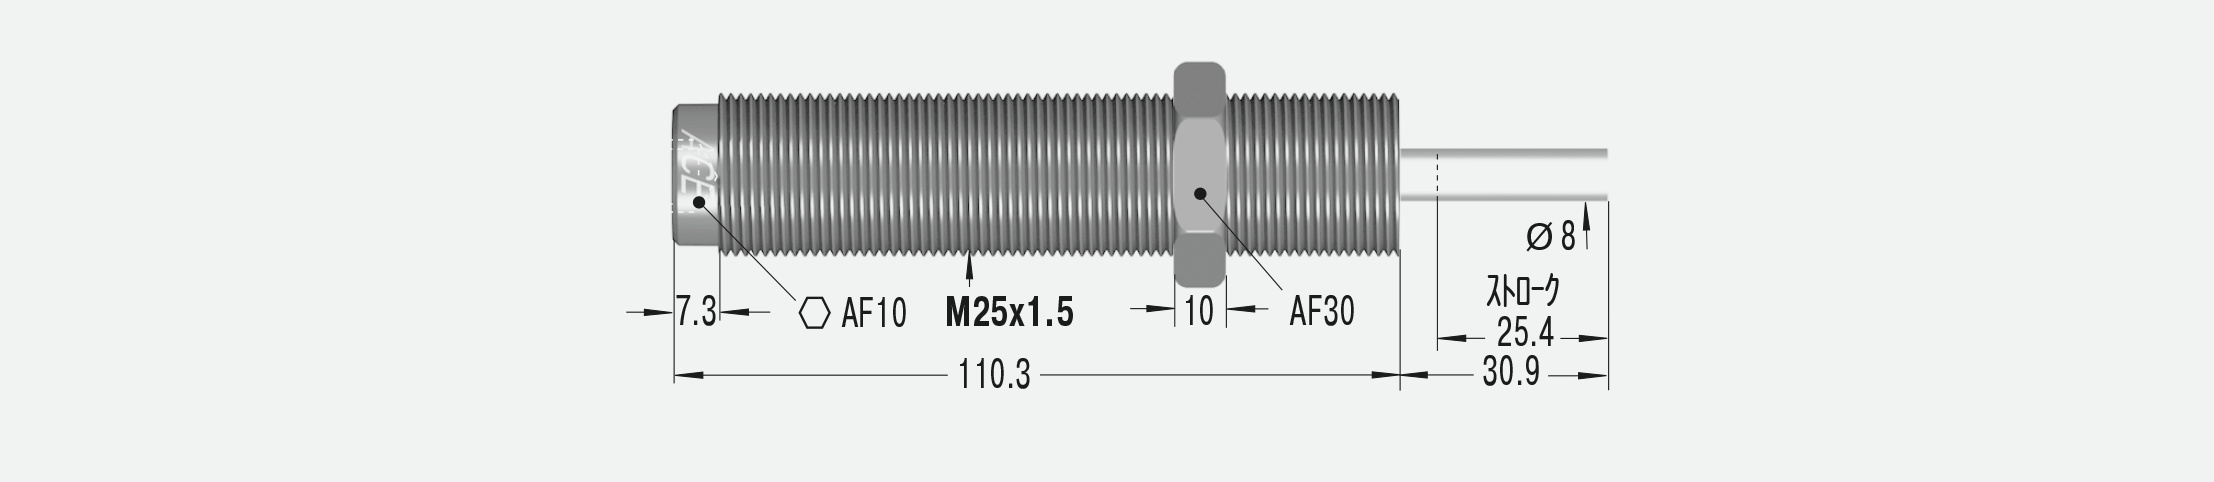 MC600MH2-V4A